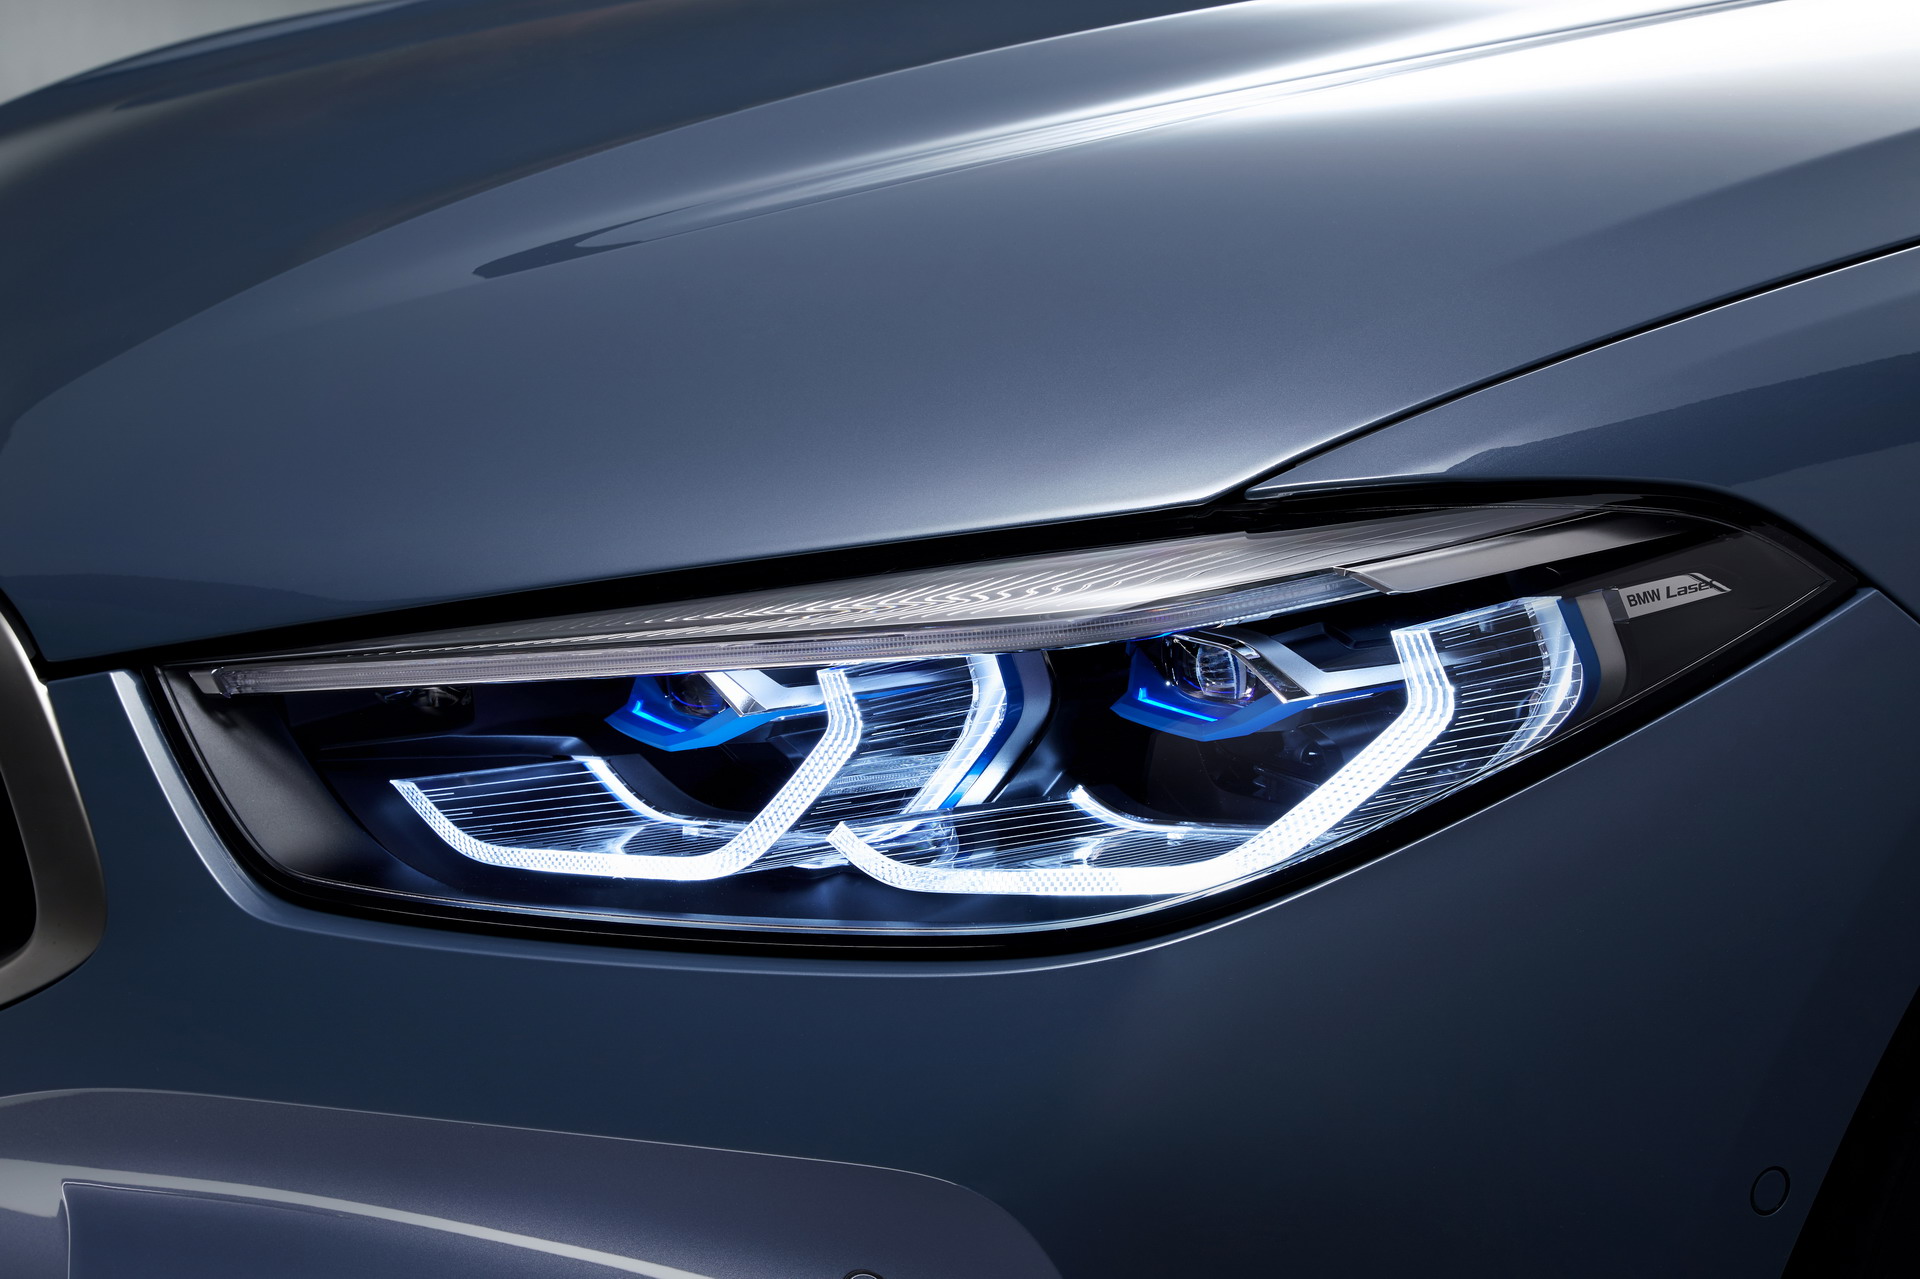 BMW Laser light detail on G15 8 Series